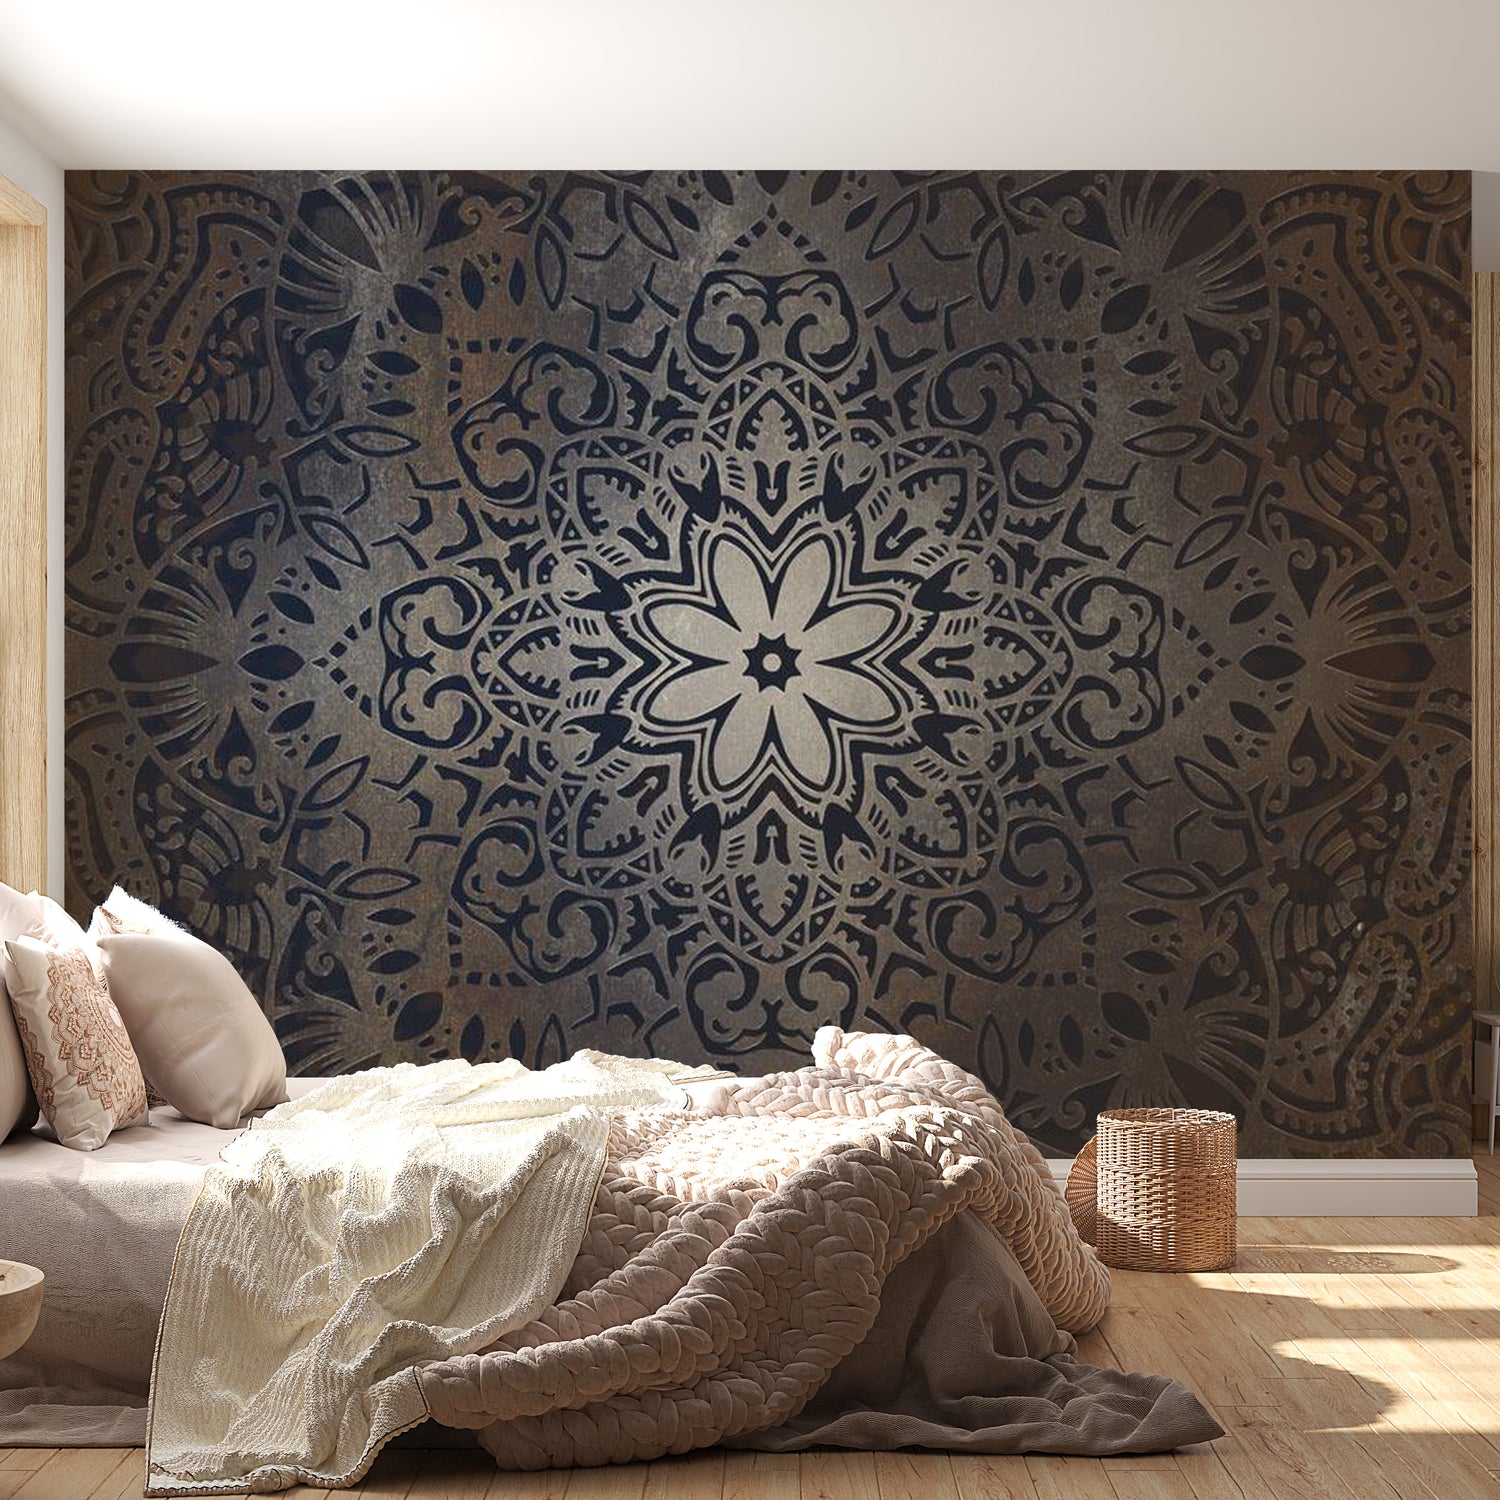 Mandala Wallpaper Wall Mural - Iron Flower